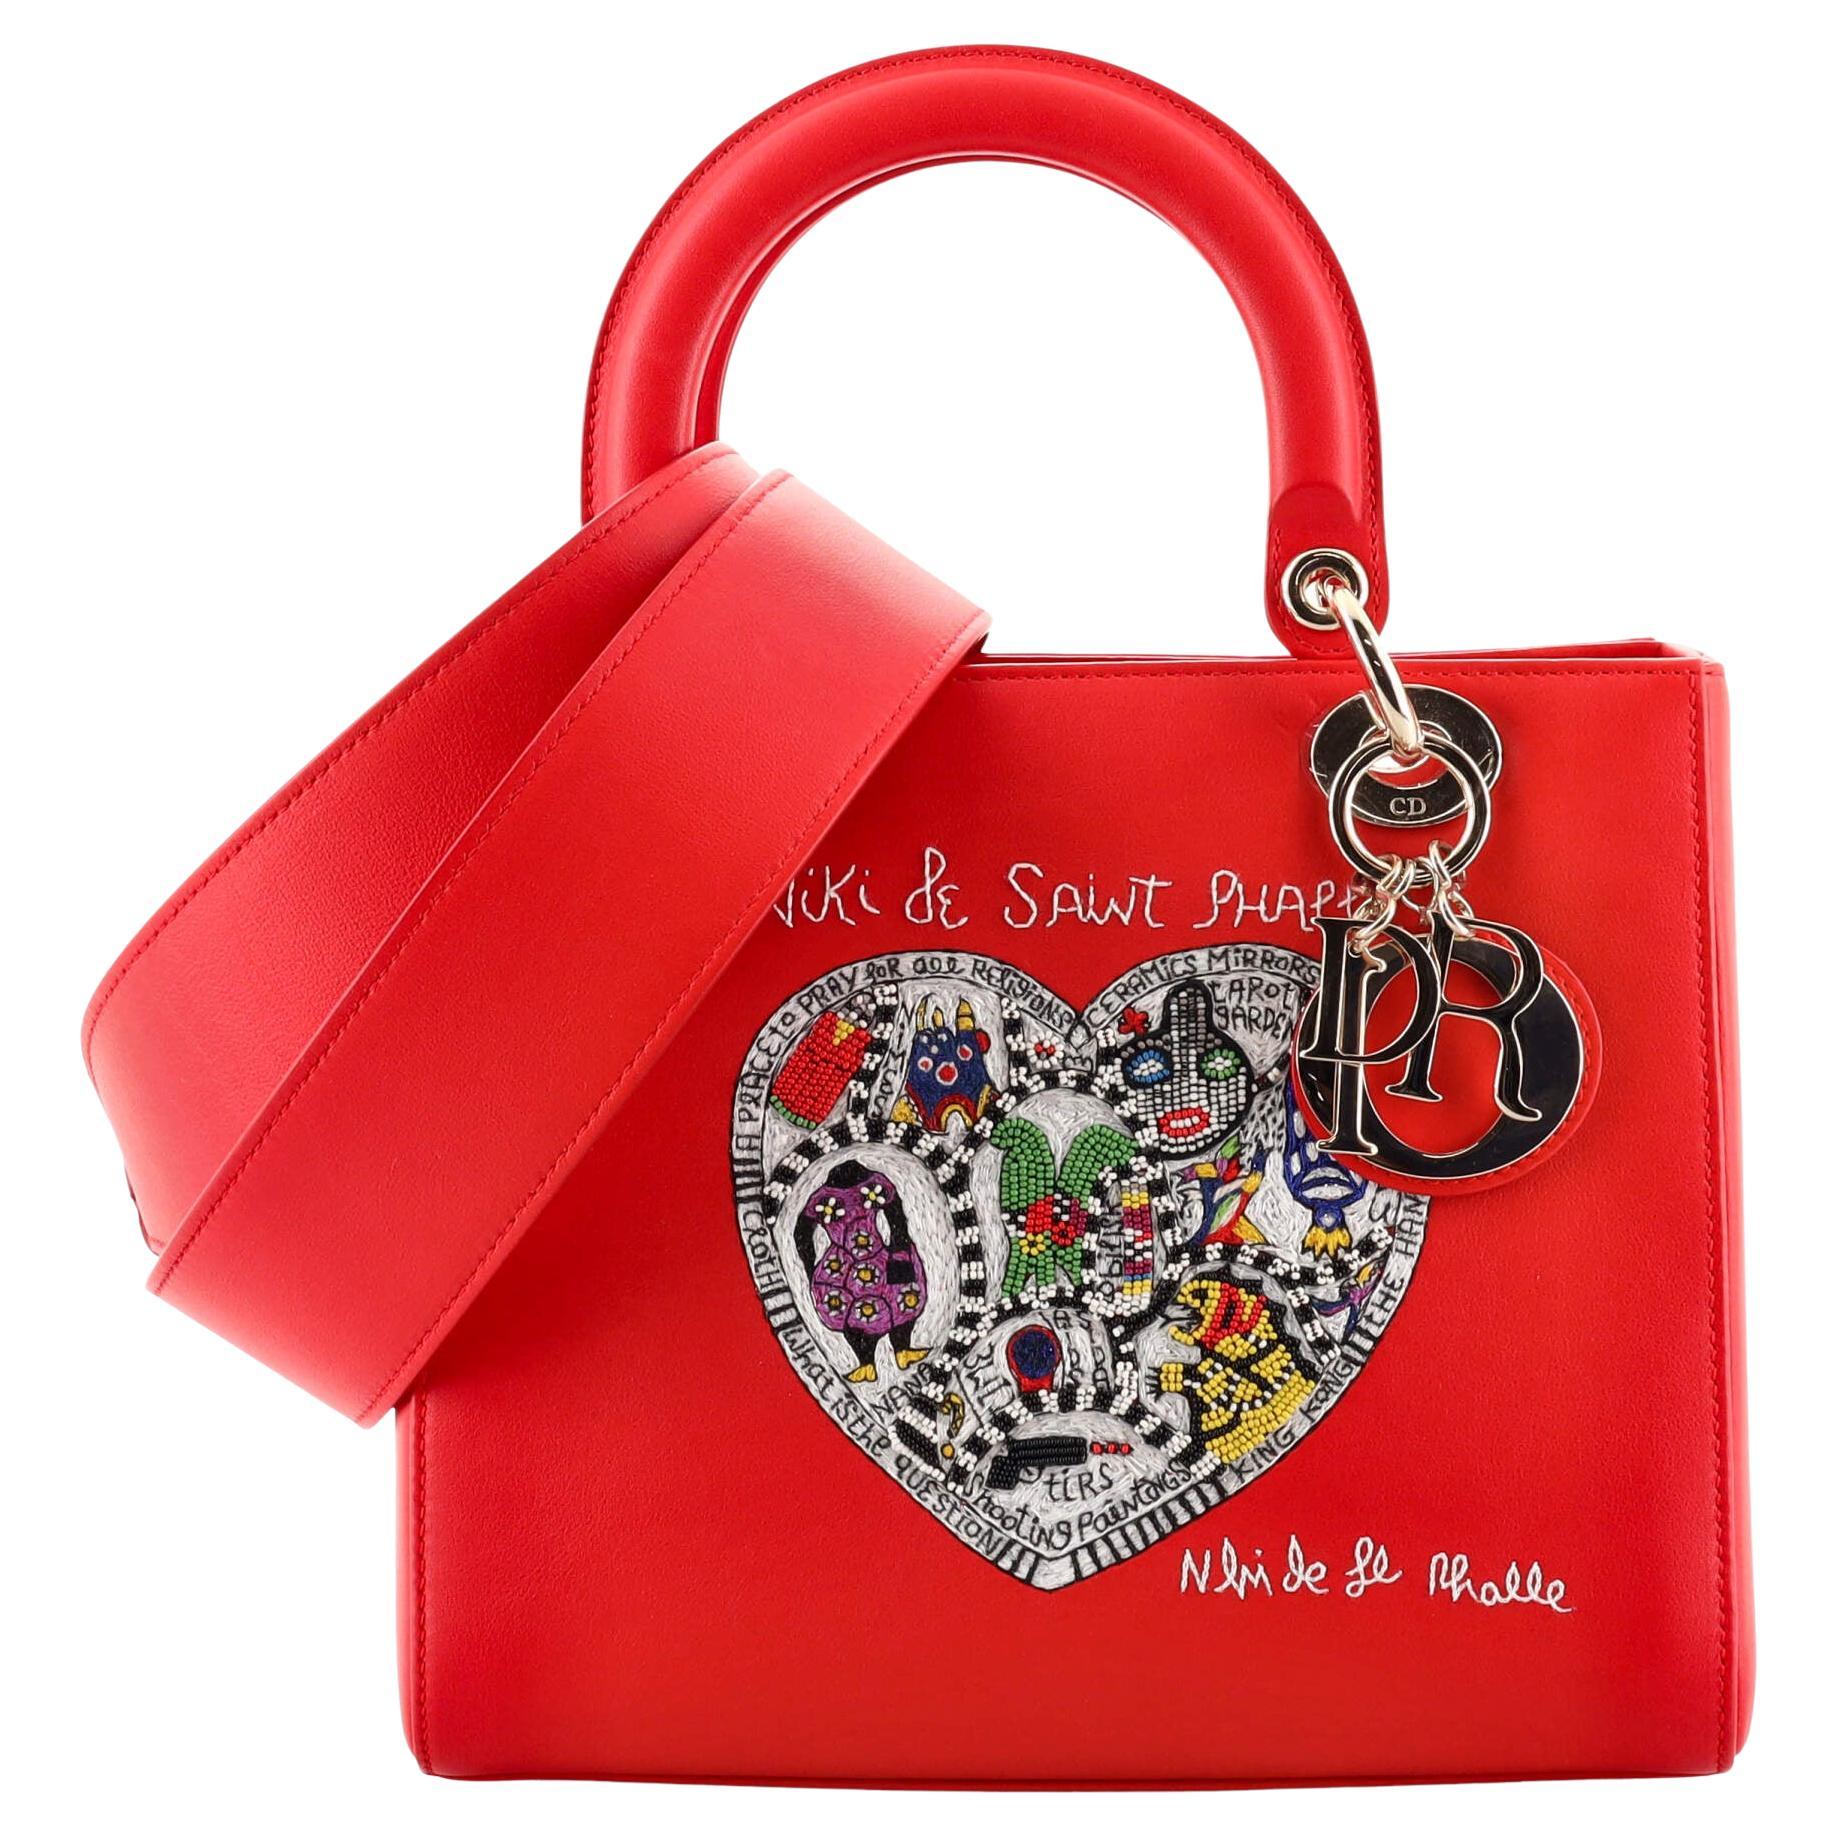 Christian Dior Lady Dior Bag Limited Edition Niki de Saint Phalle Embroidered